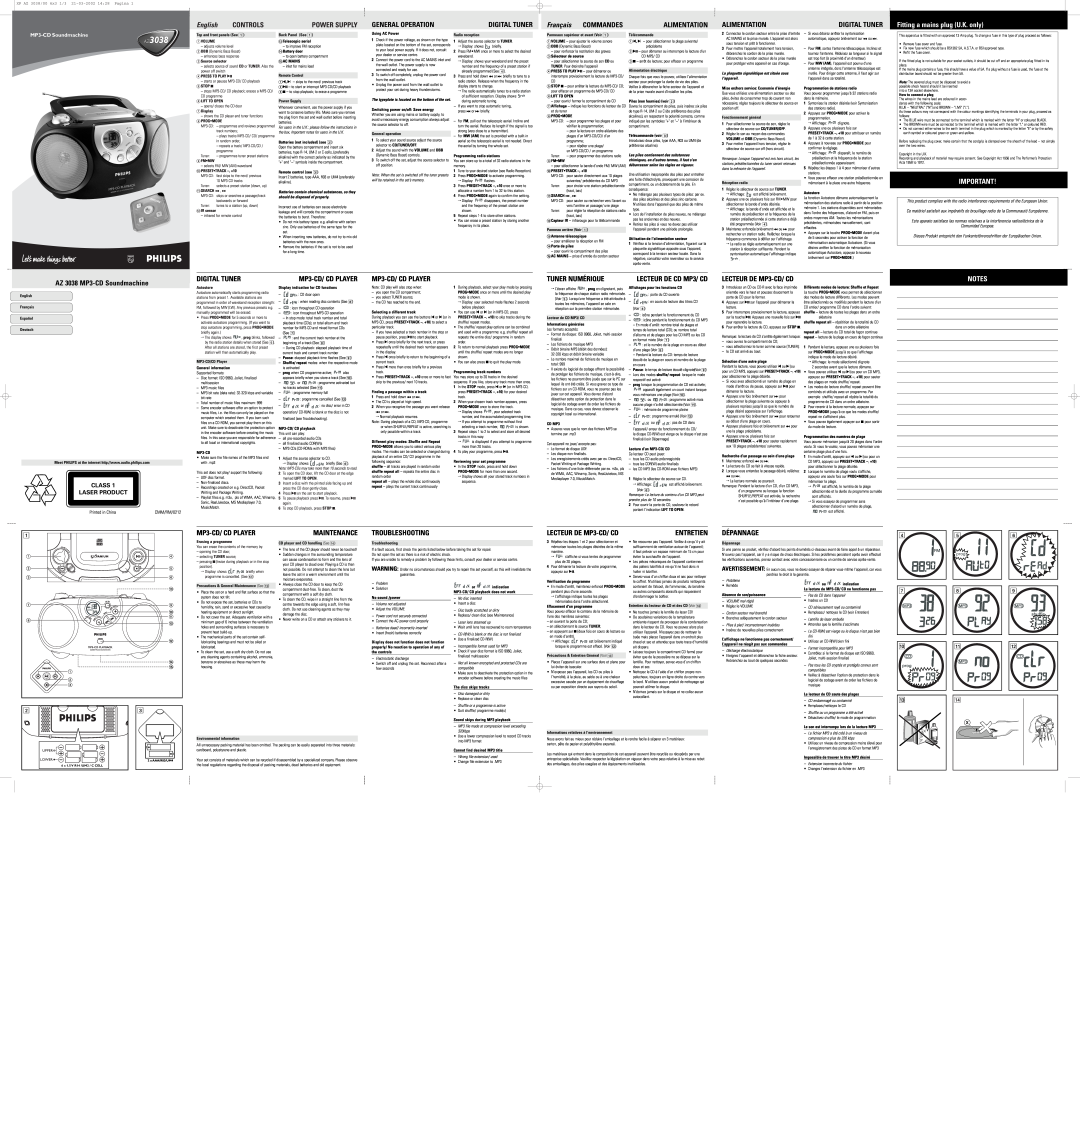 Philips manual AZAZ30383038, English, Français COMMANDES, Fitting a mains plug U.K. only 